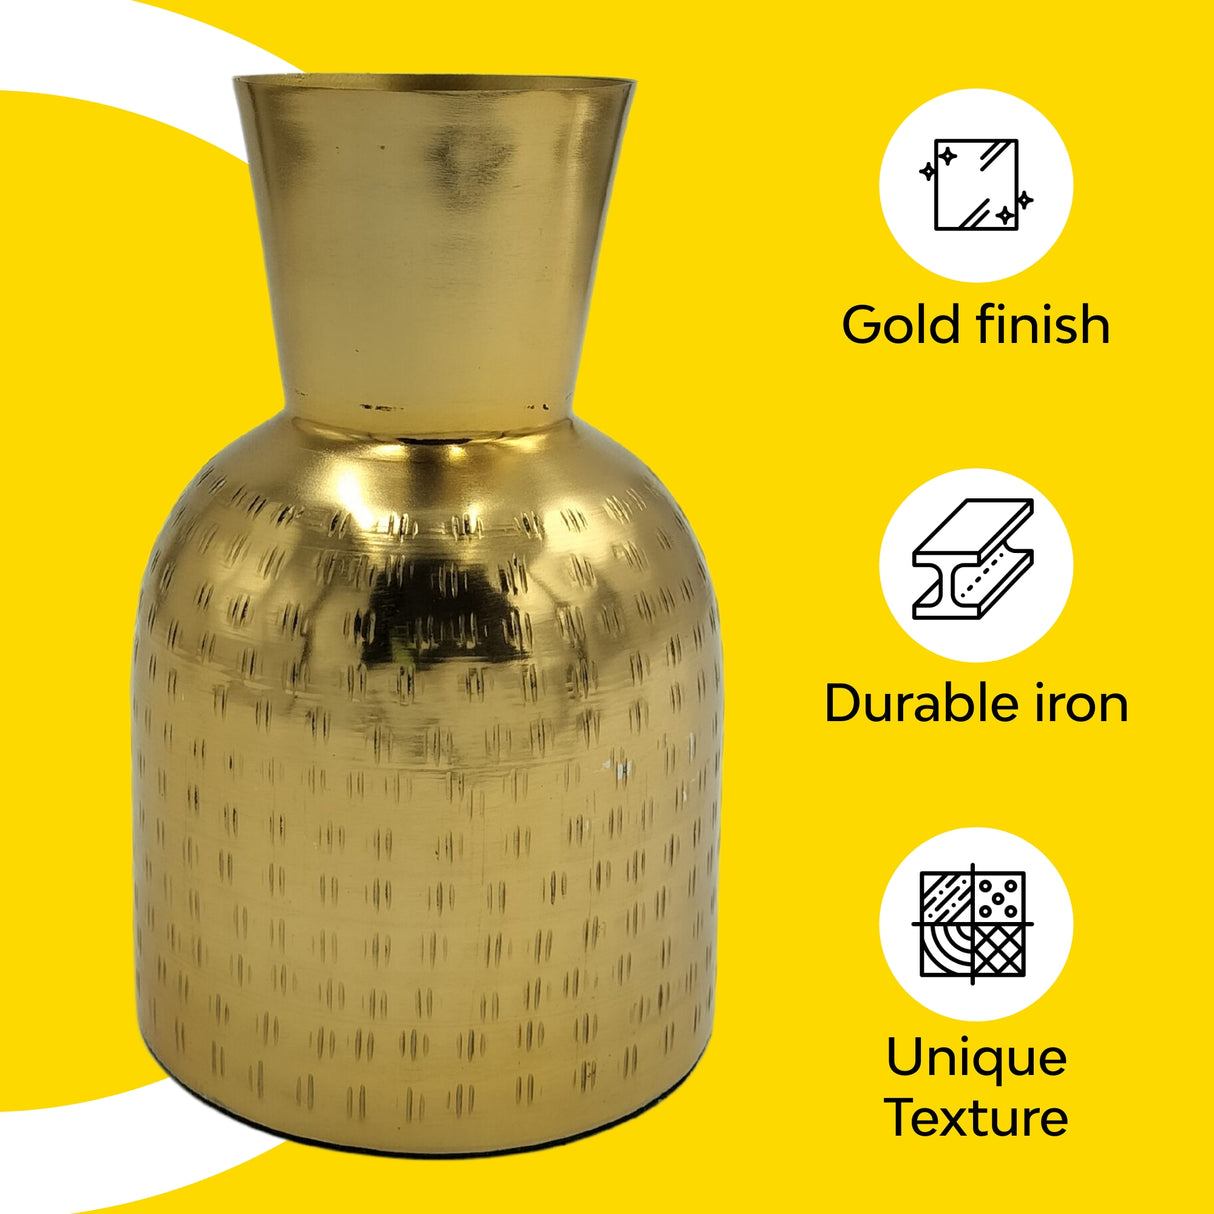 Gold finish metal vase